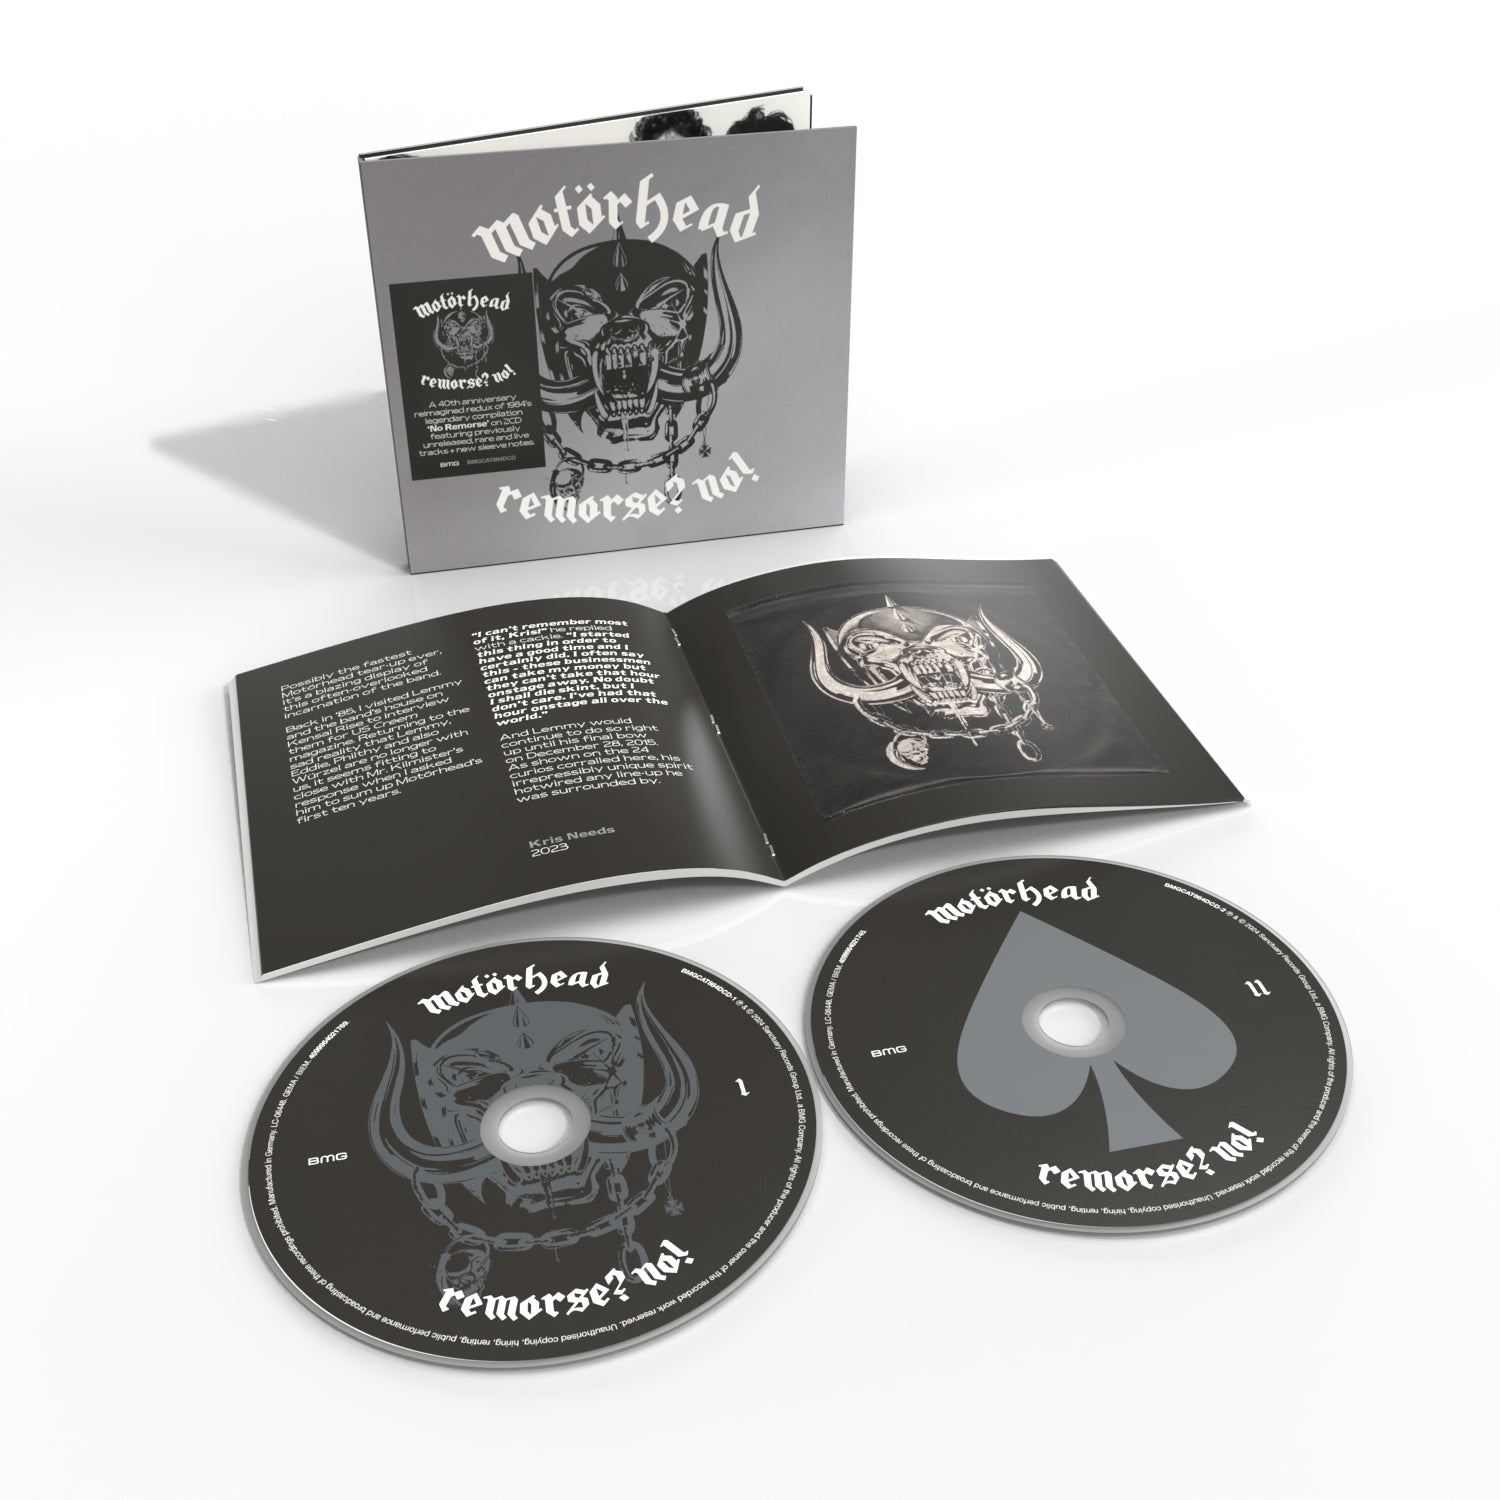 Motorhead "Remorse? No!" 2 CD Digipak - PRE-ORDER